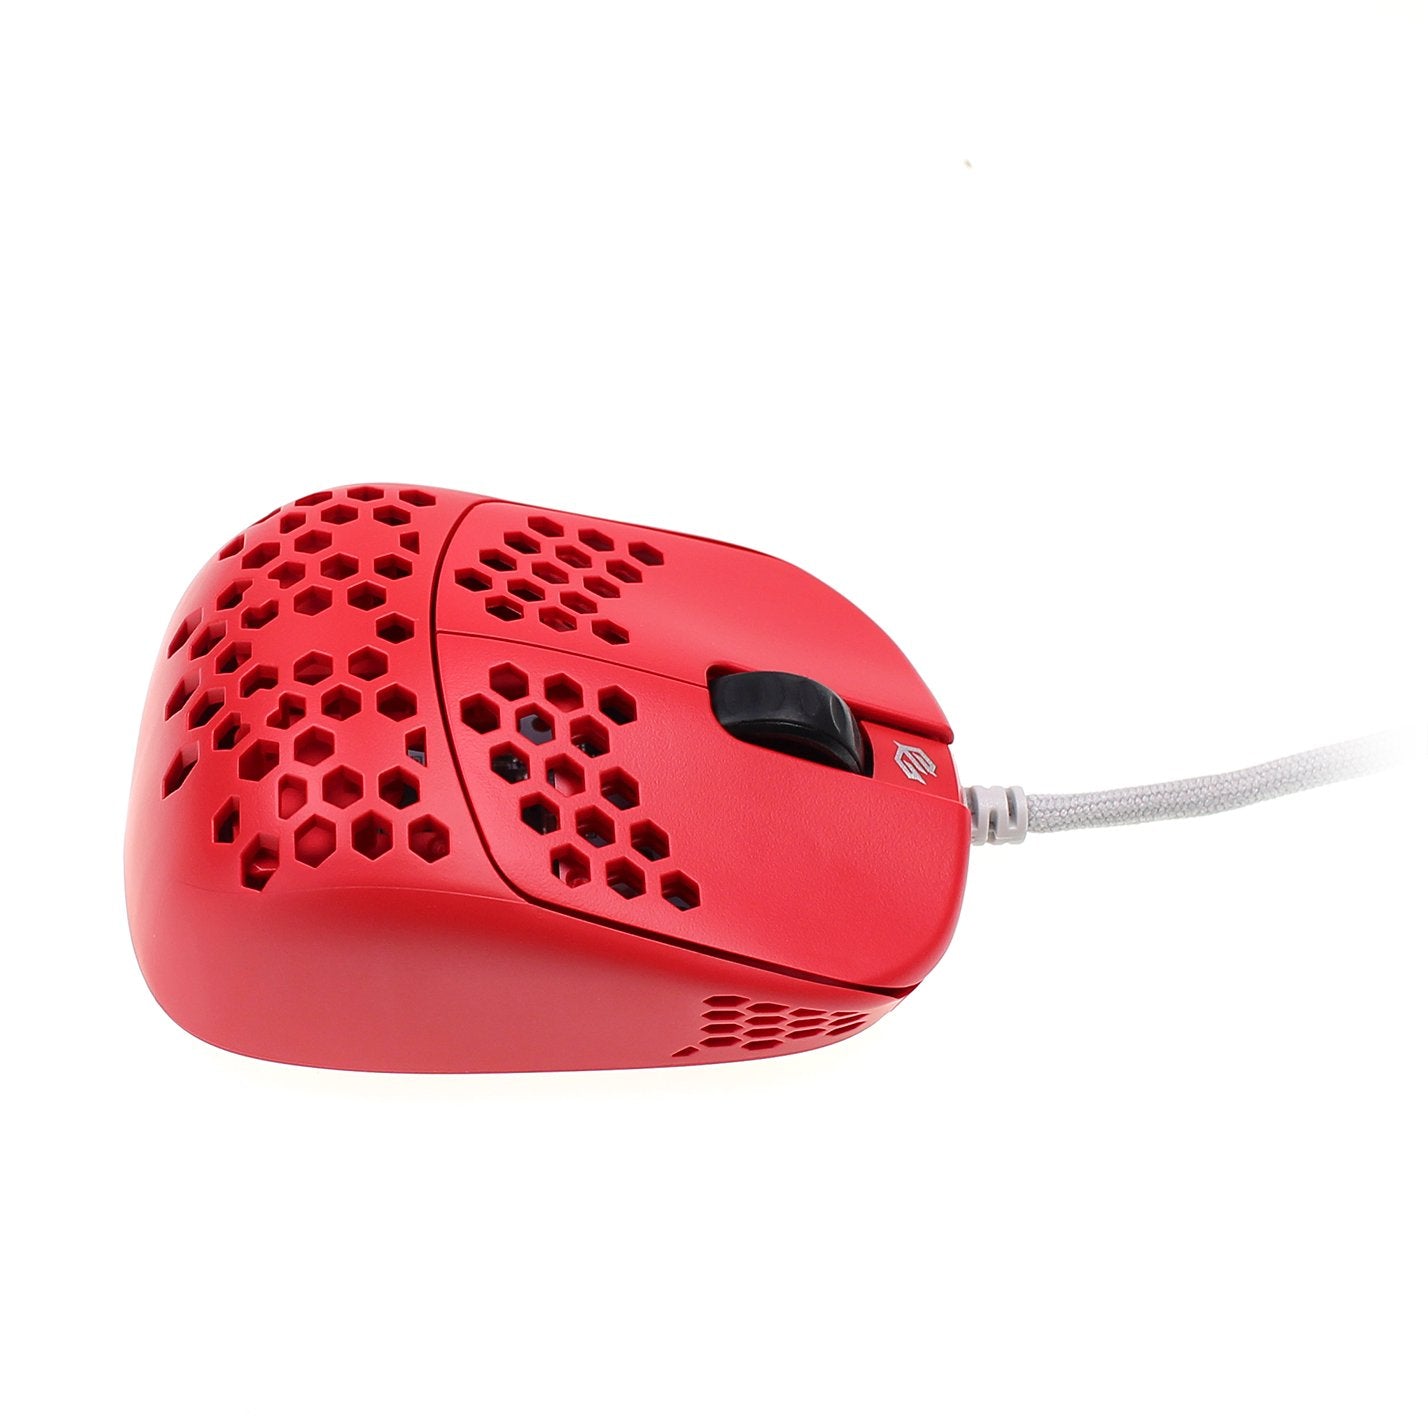 G-Wolves Husky Red Fingertip Gaming Mouse-Addice Inc